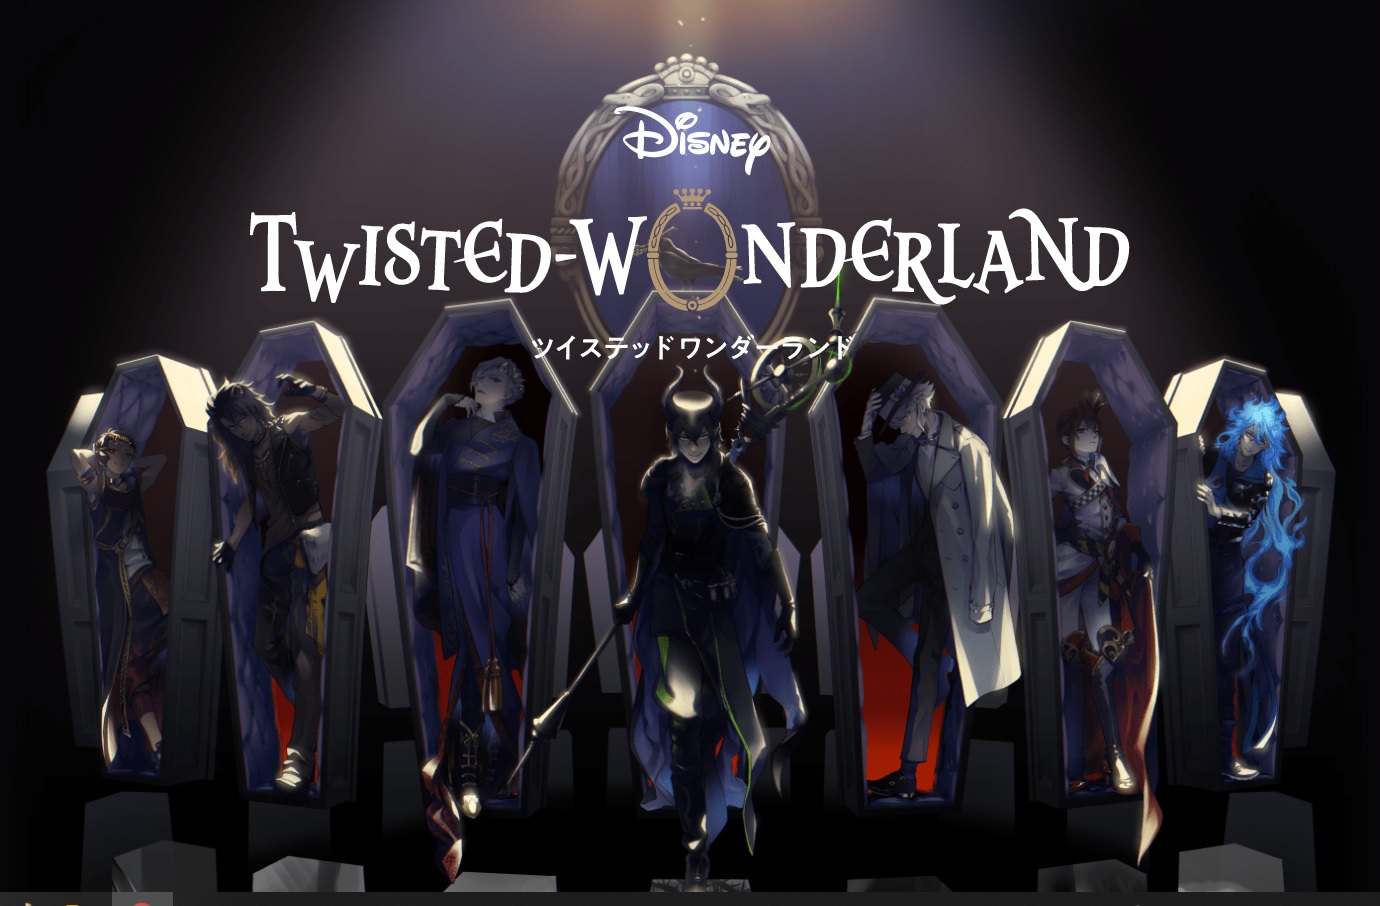 Twisted-Wonderland Is Like A Disney Anime Version Of Hogwarts